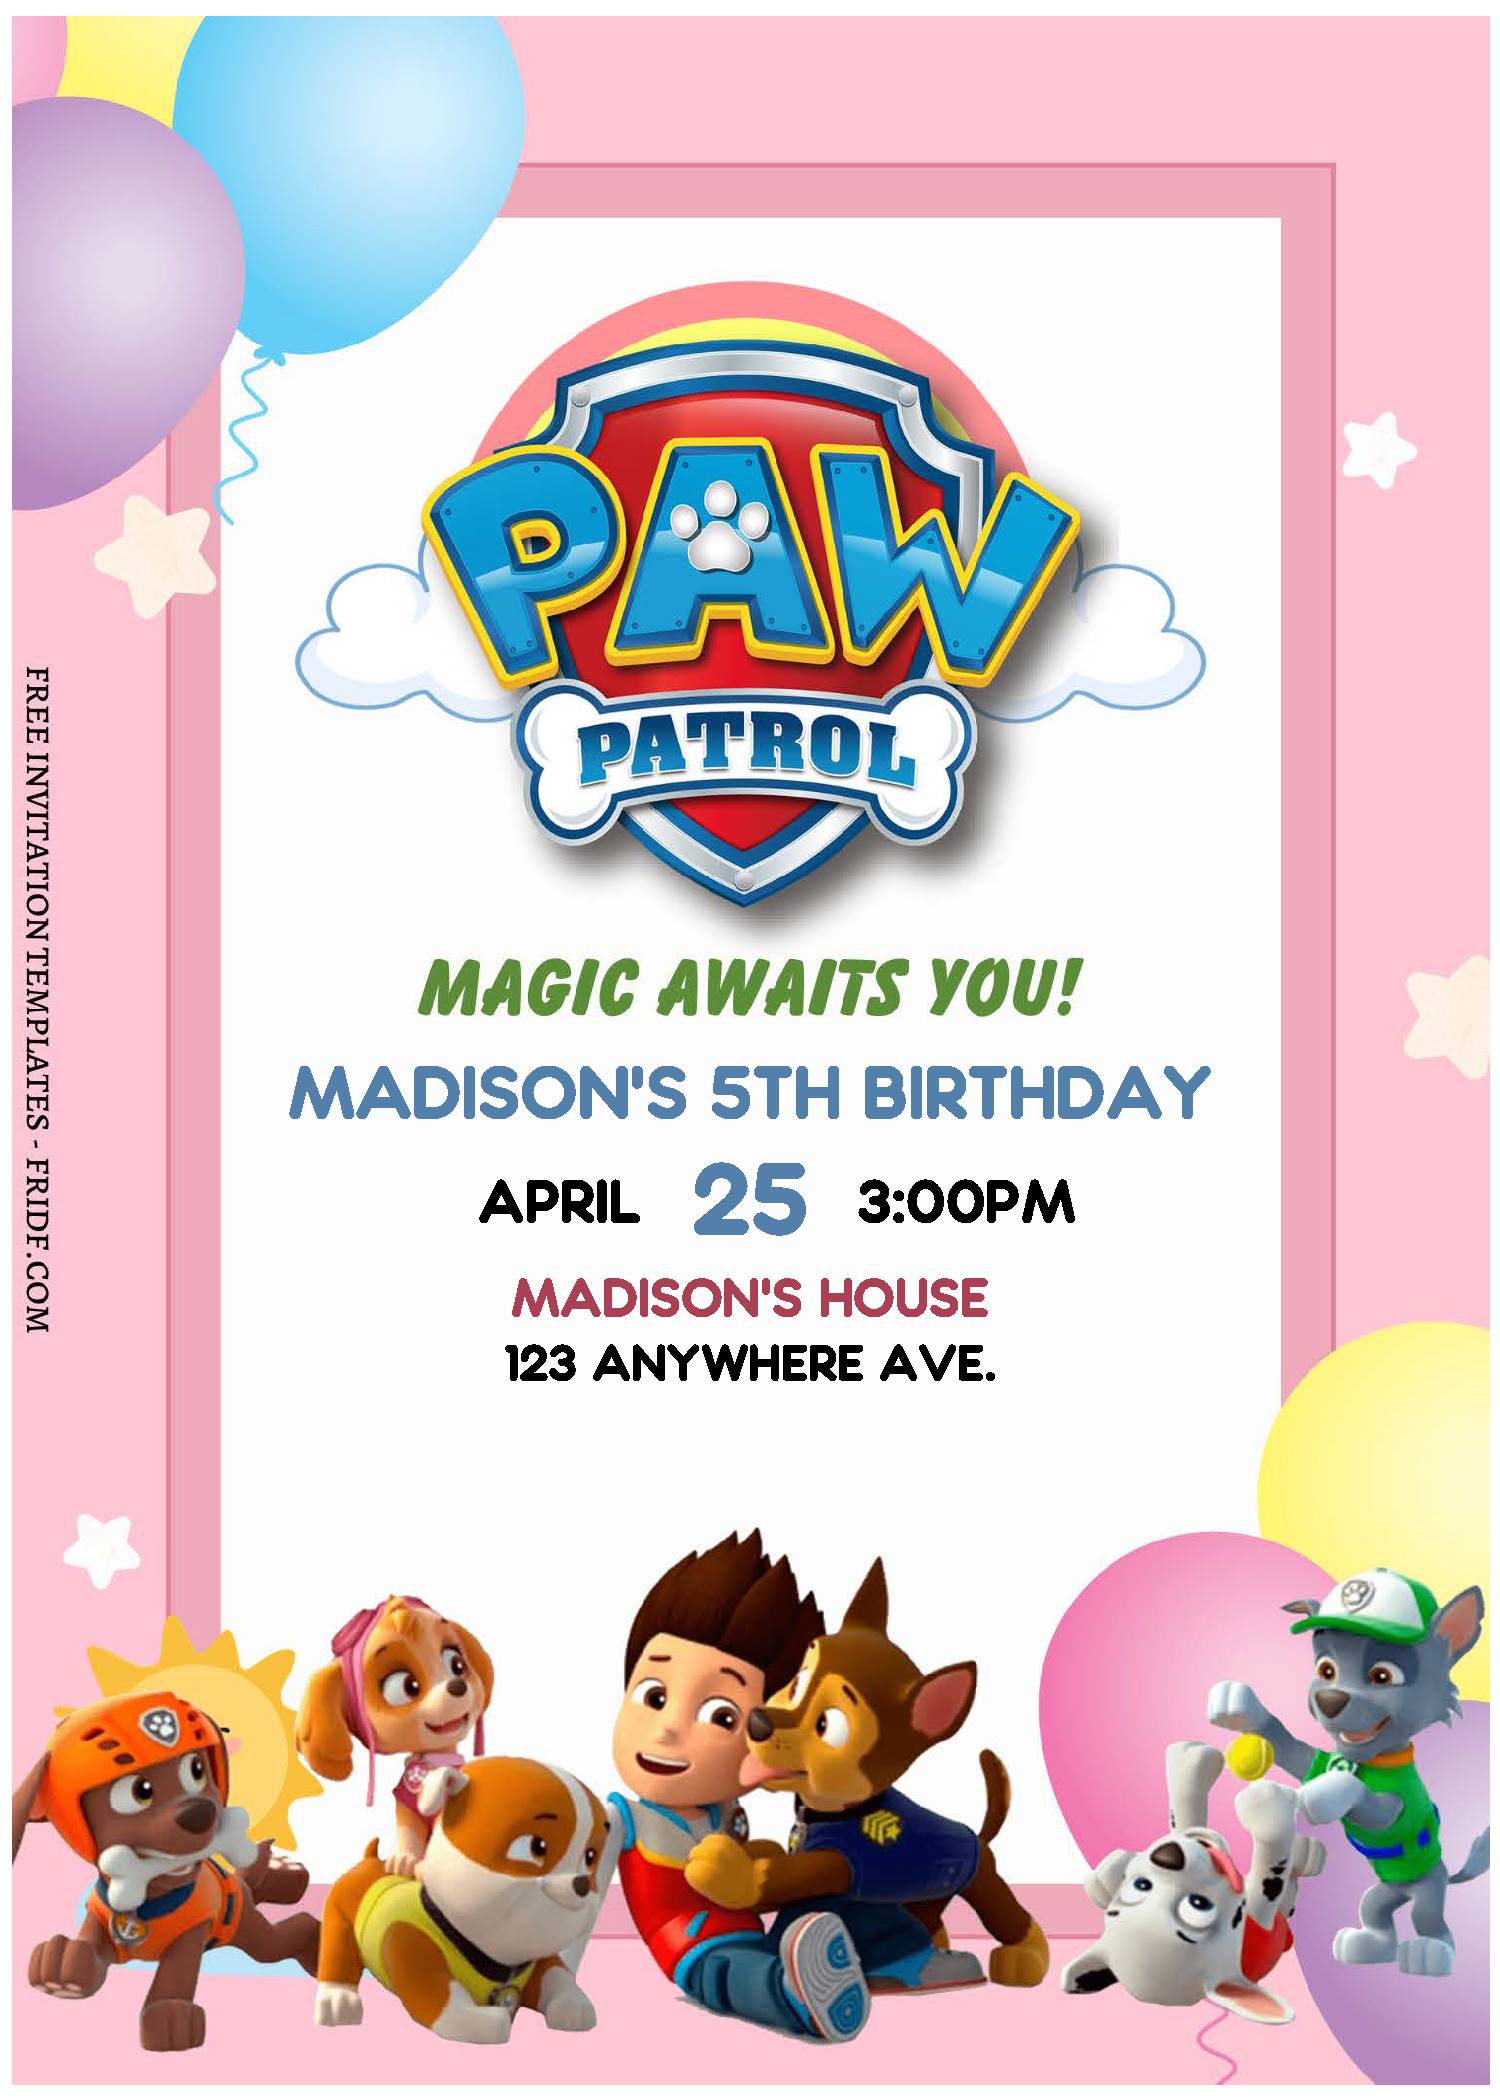 Download (Free Editable PDF) Puppy Power PAW Patrol Birthday Invitation ...